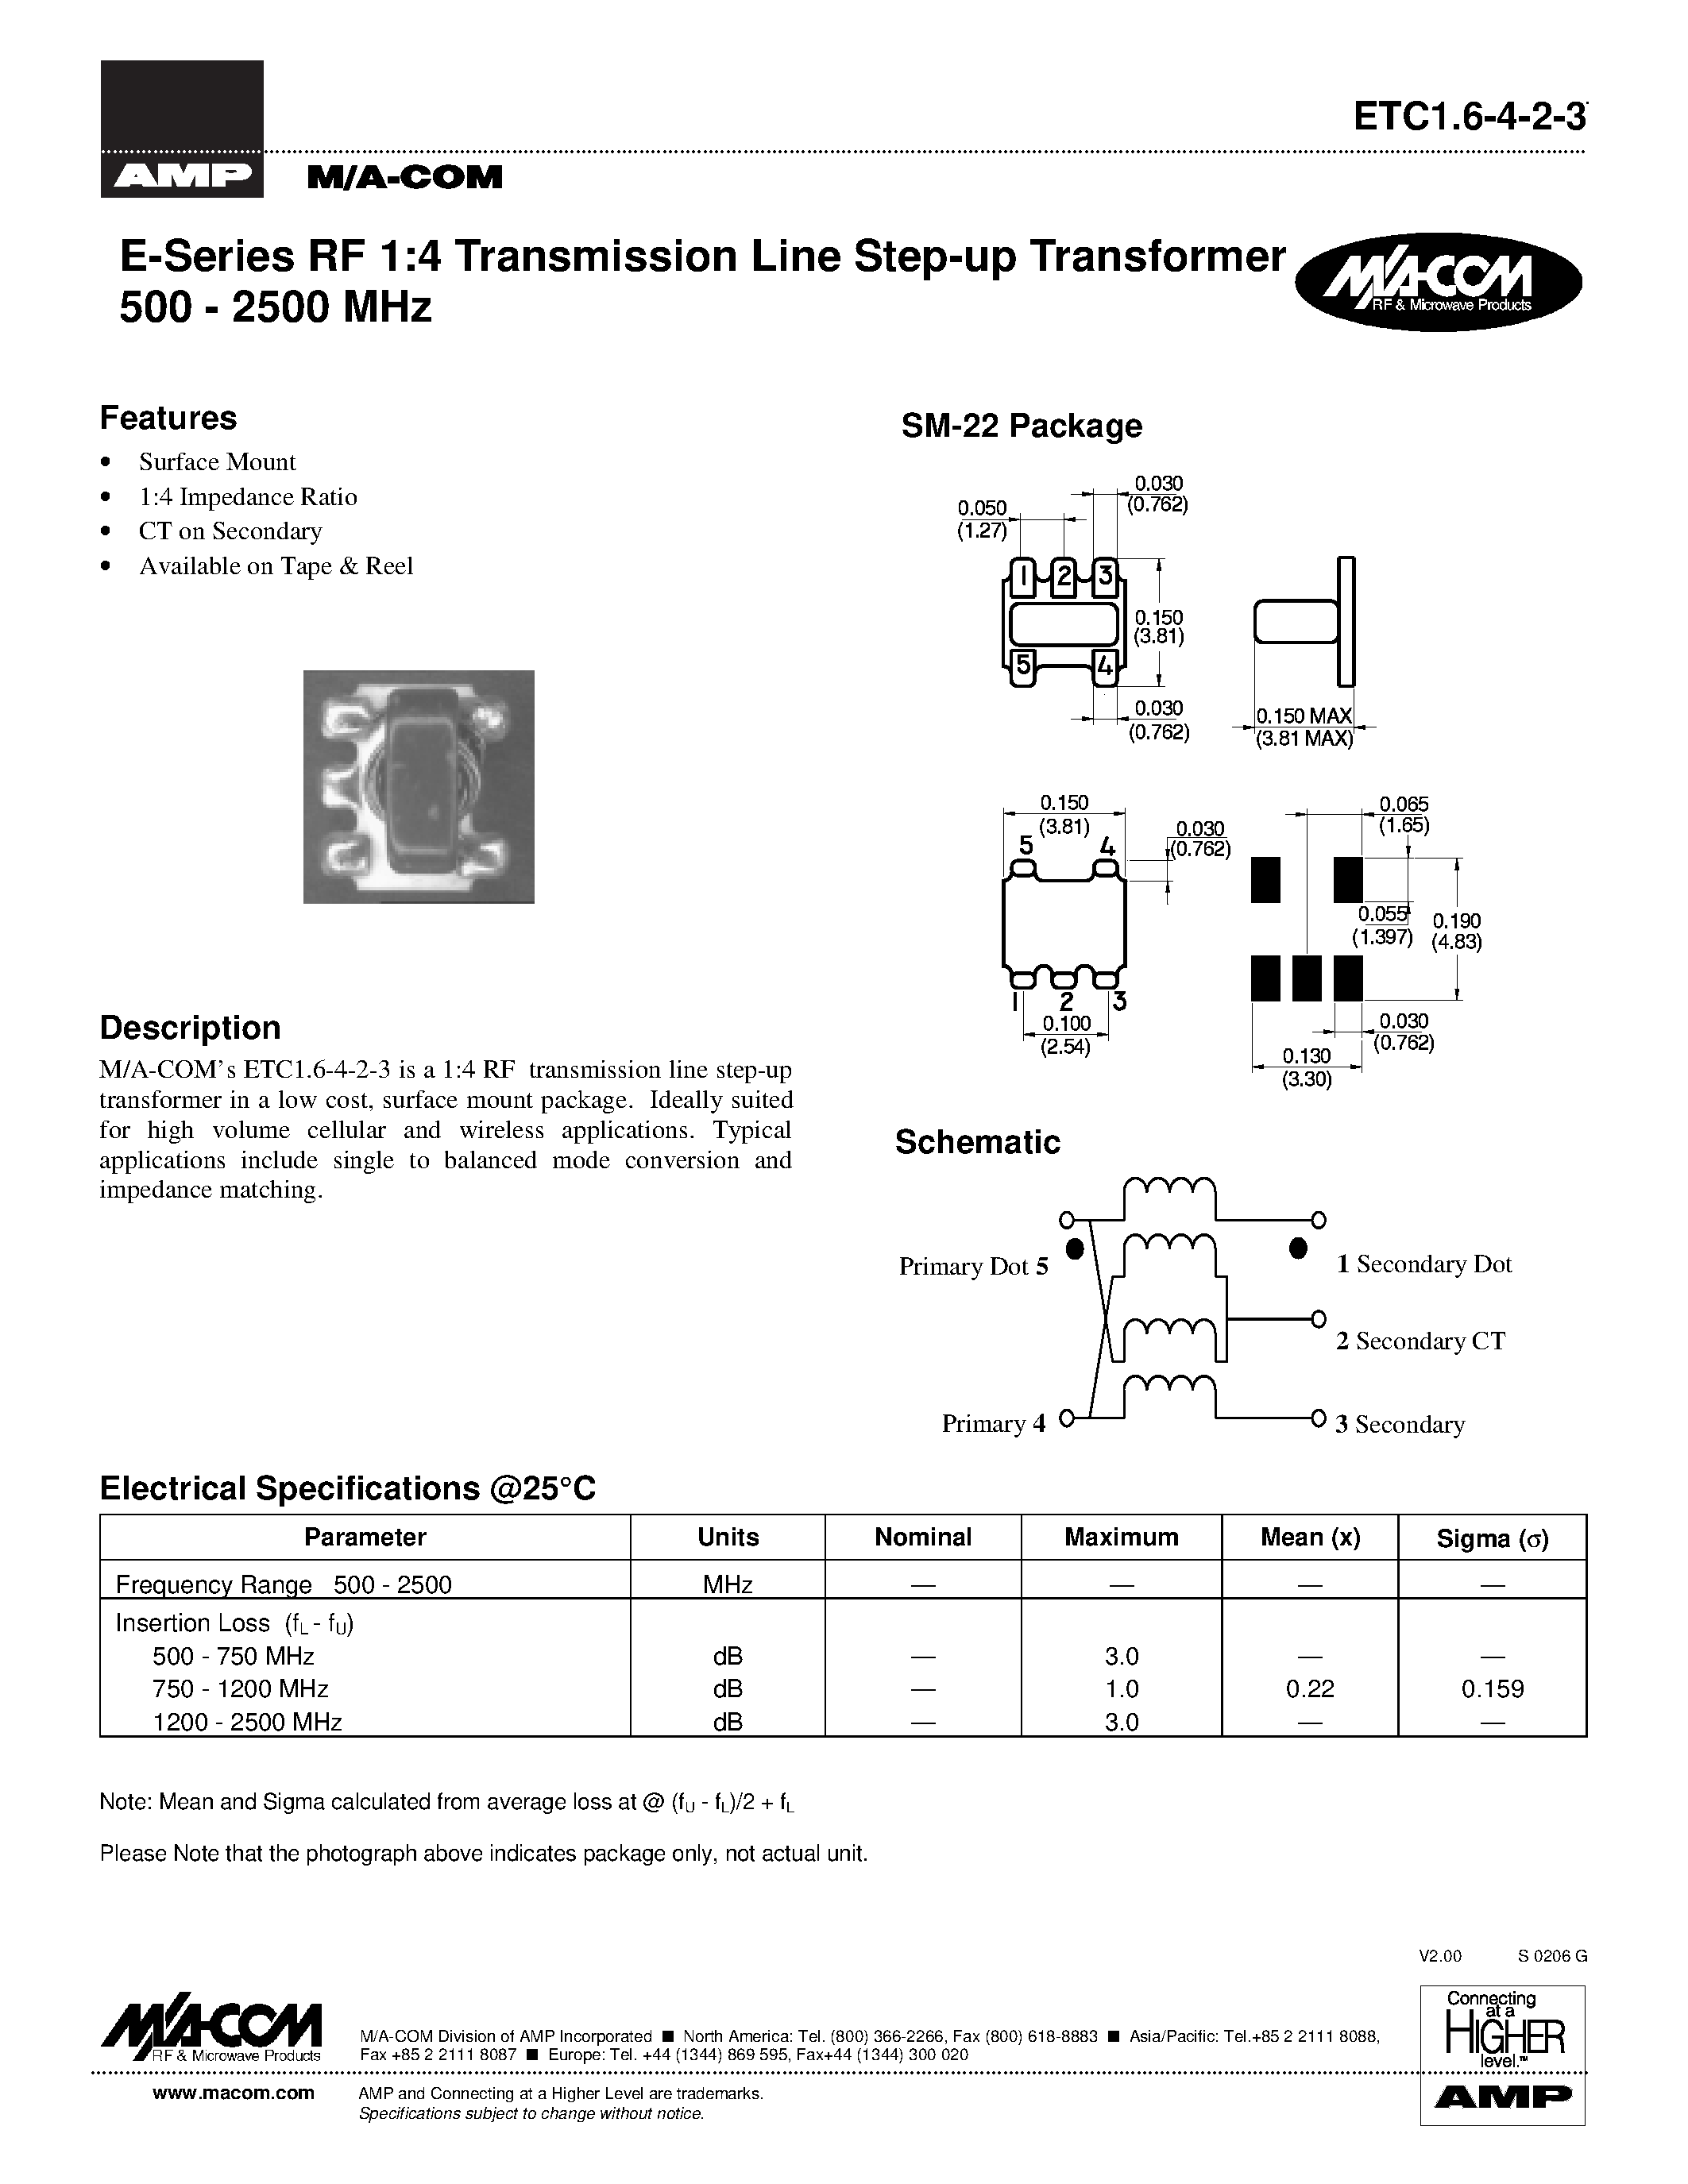 Даташит ETC16-4-2-3-E-Series RF 1:4 Transmission Line Step-up Transformer 500 - 2500 MHz страница 1